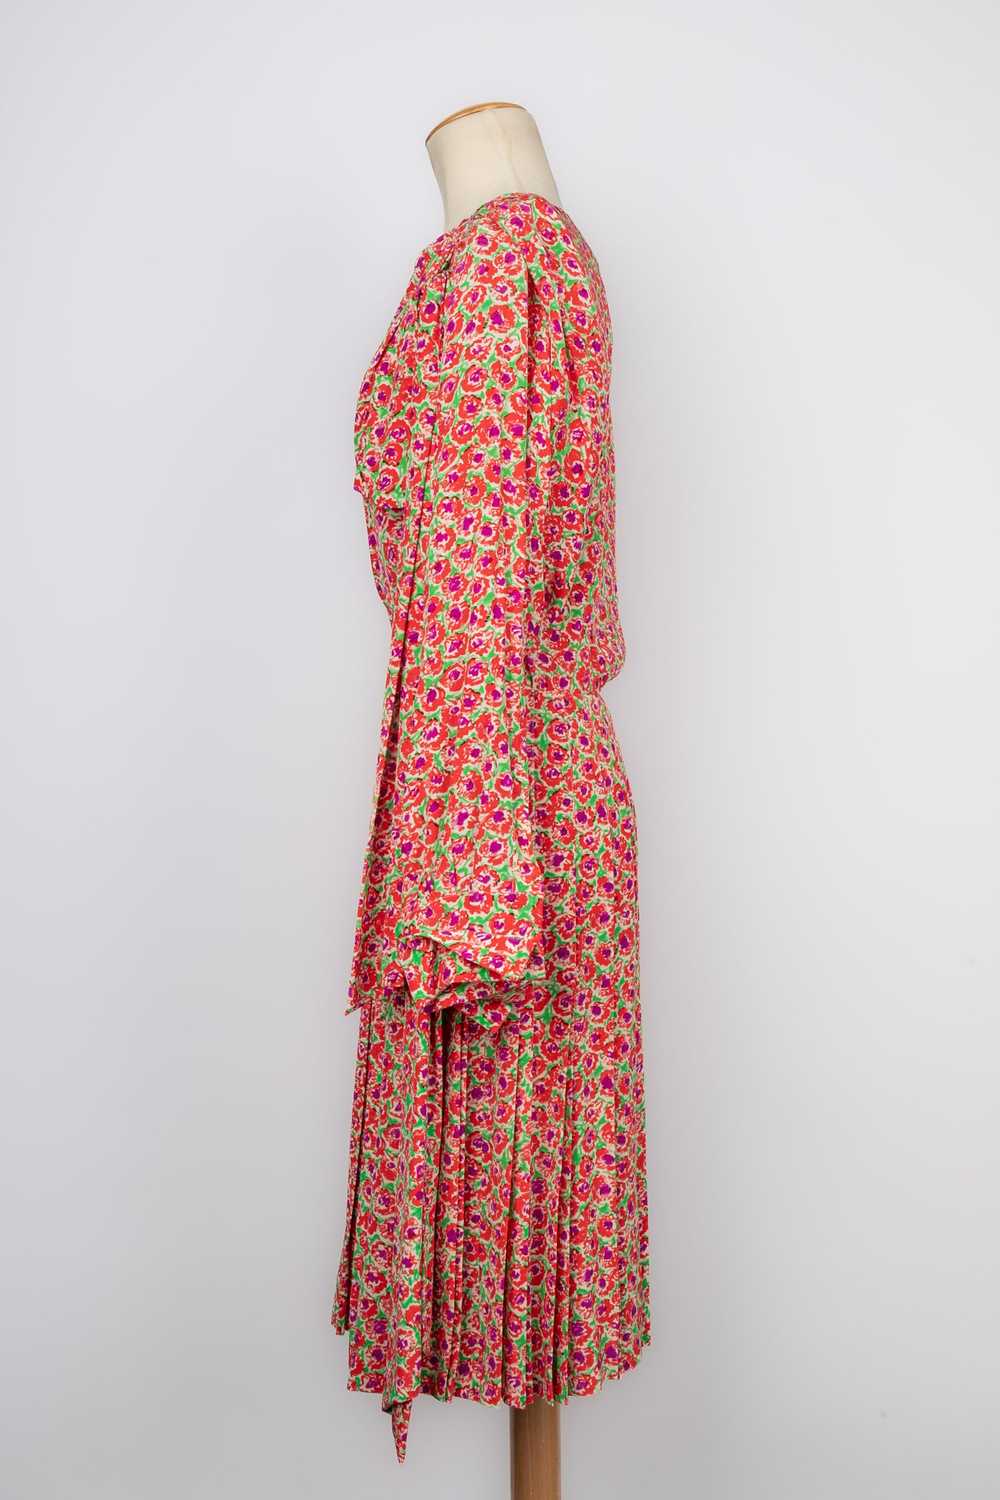 Yves Saint Laurent silk dress 1989 - image 2